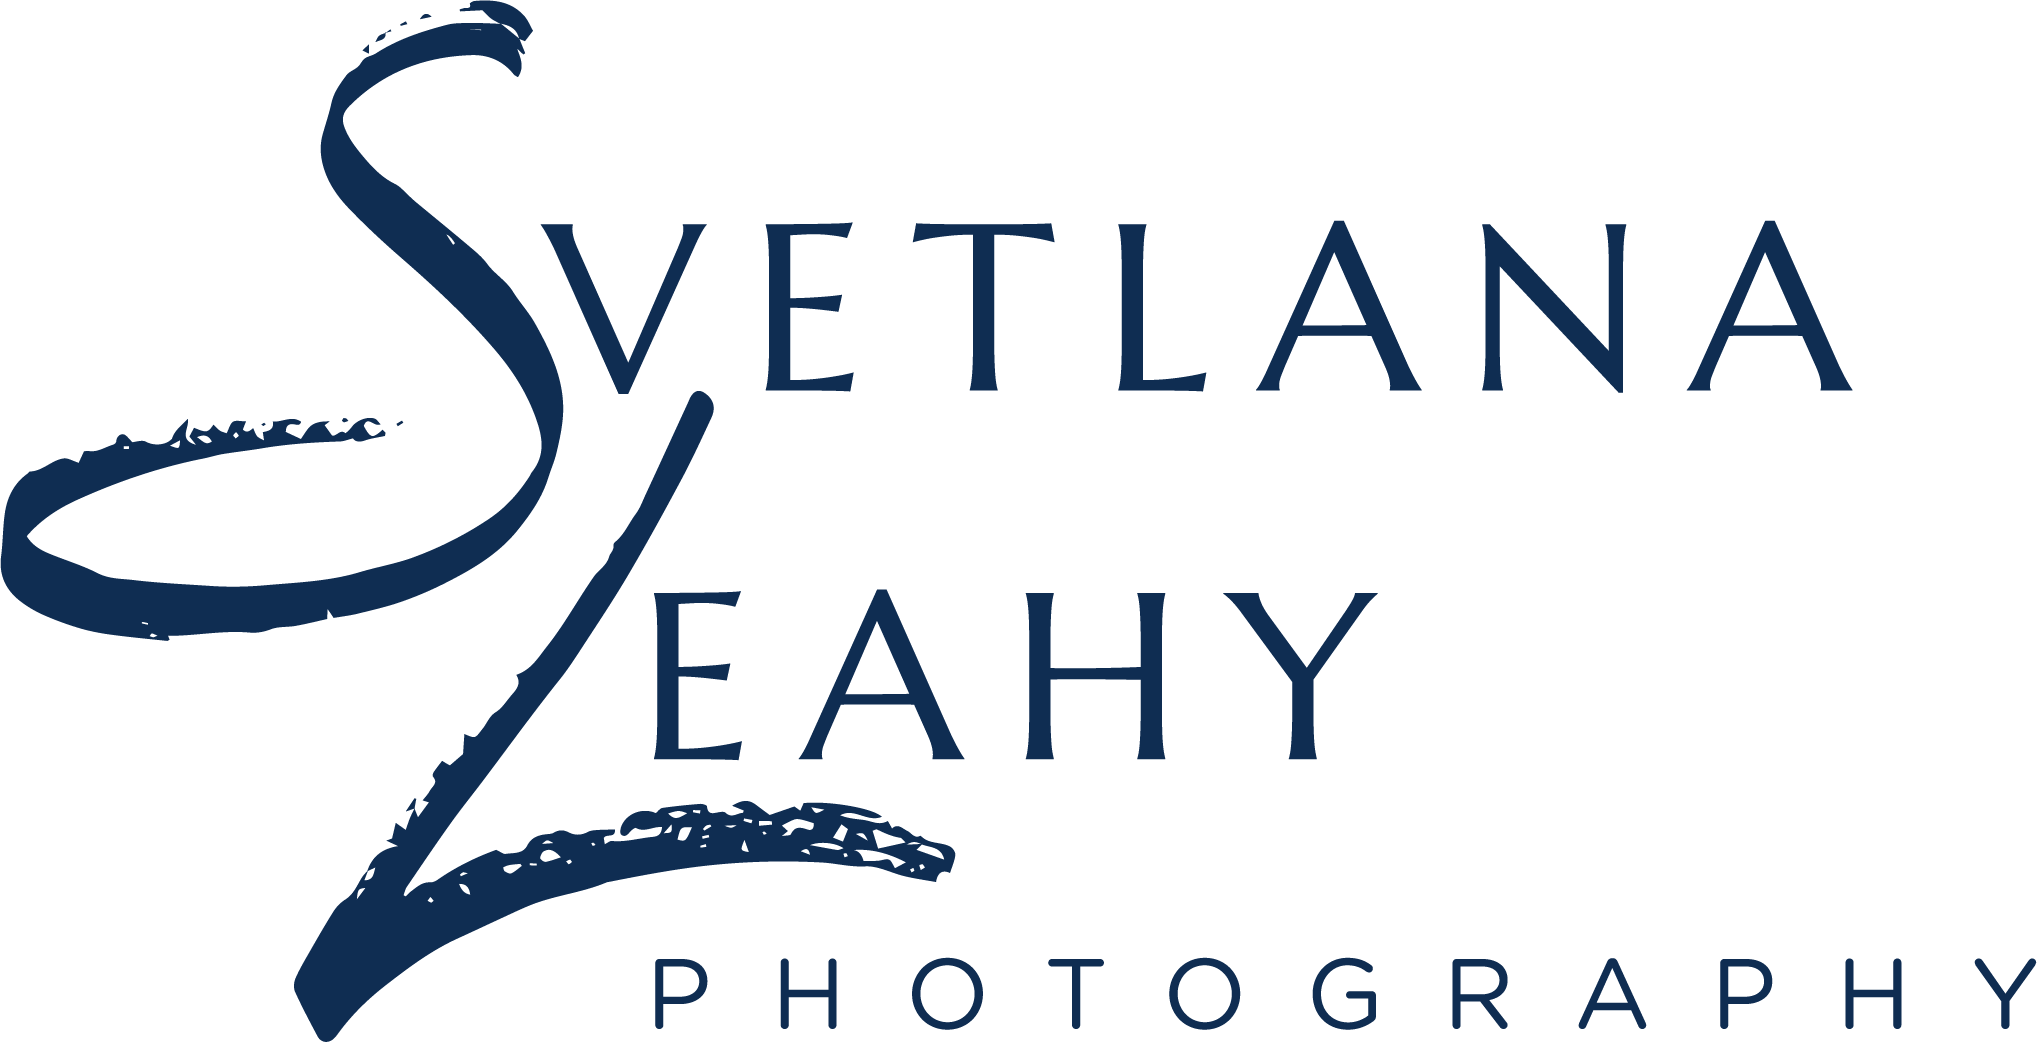 SvetlanaLeahy-Logo-color.png